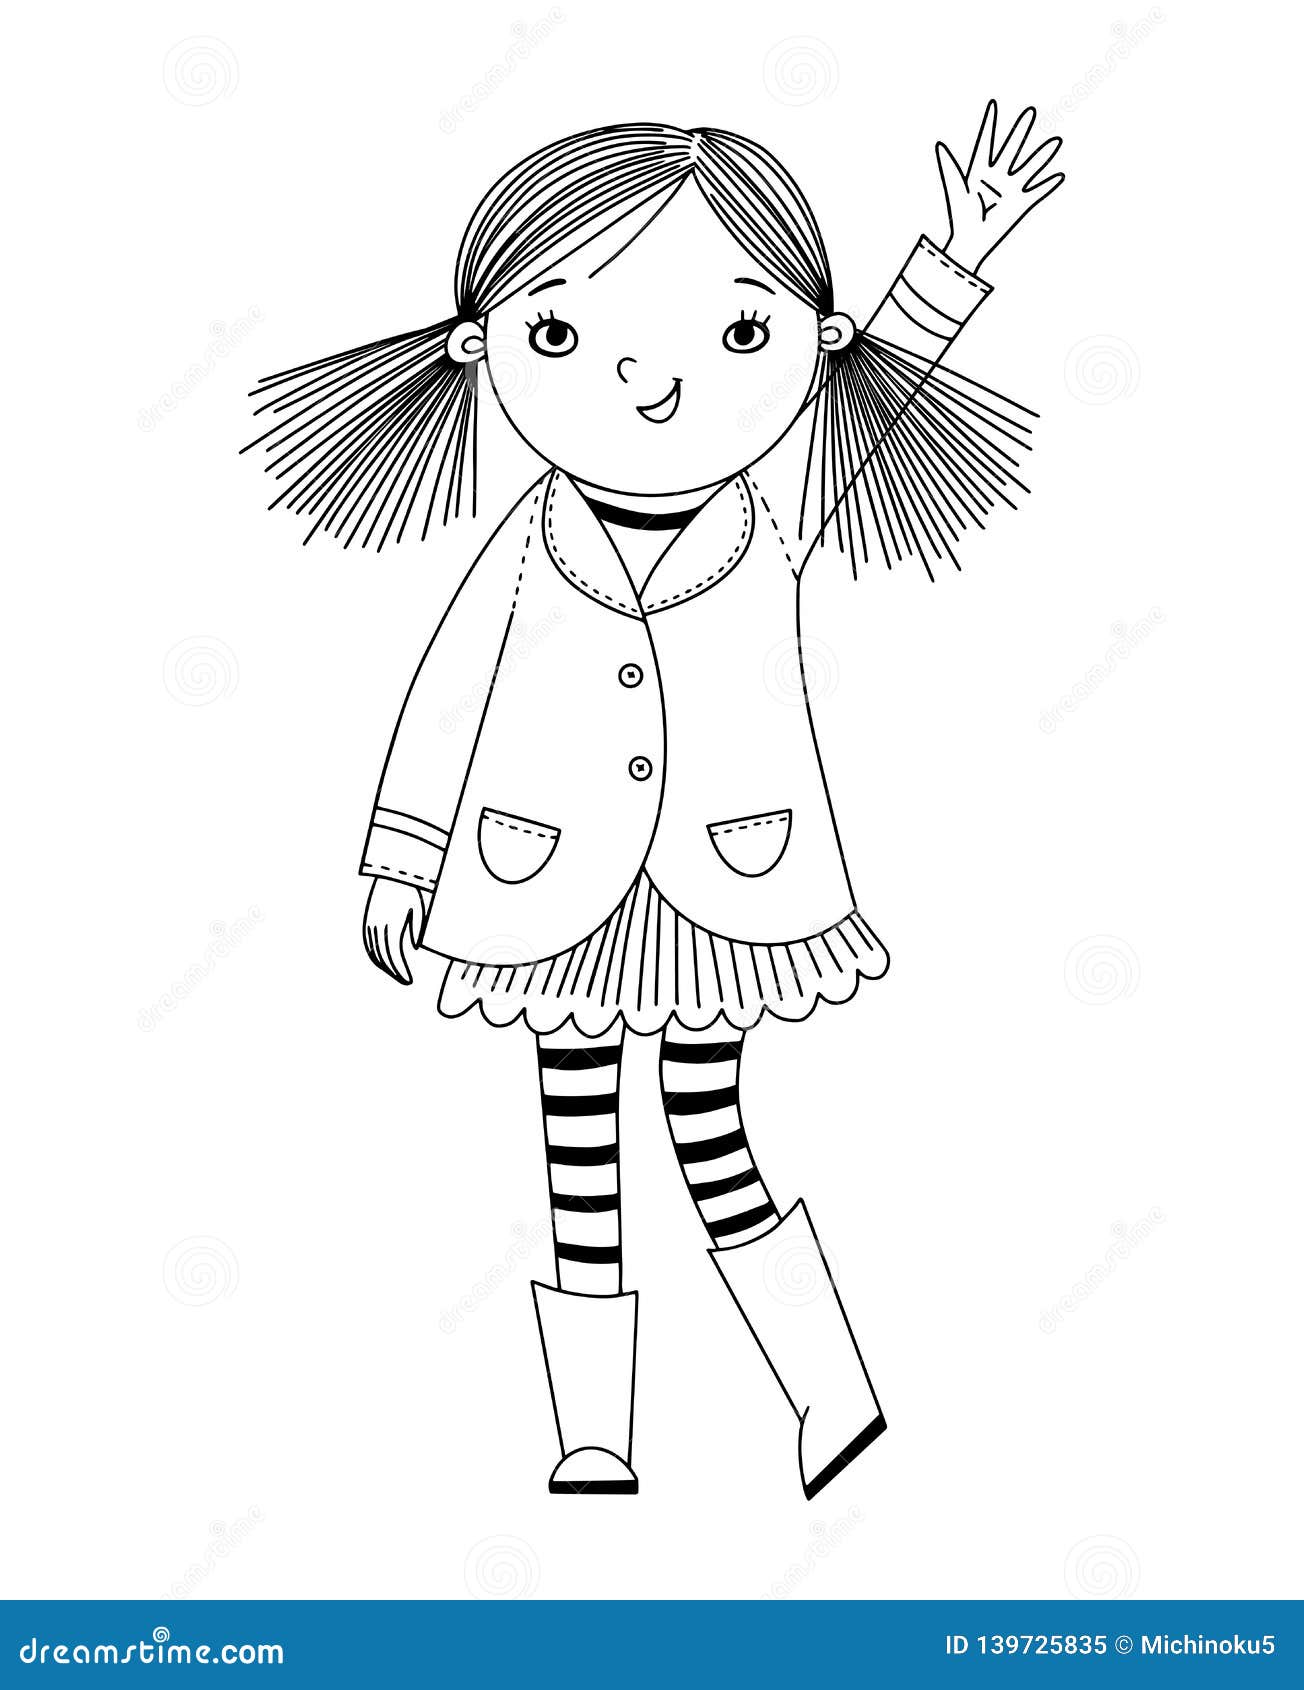 Little Girl is Waving Her Hand. Black and White Illustration for